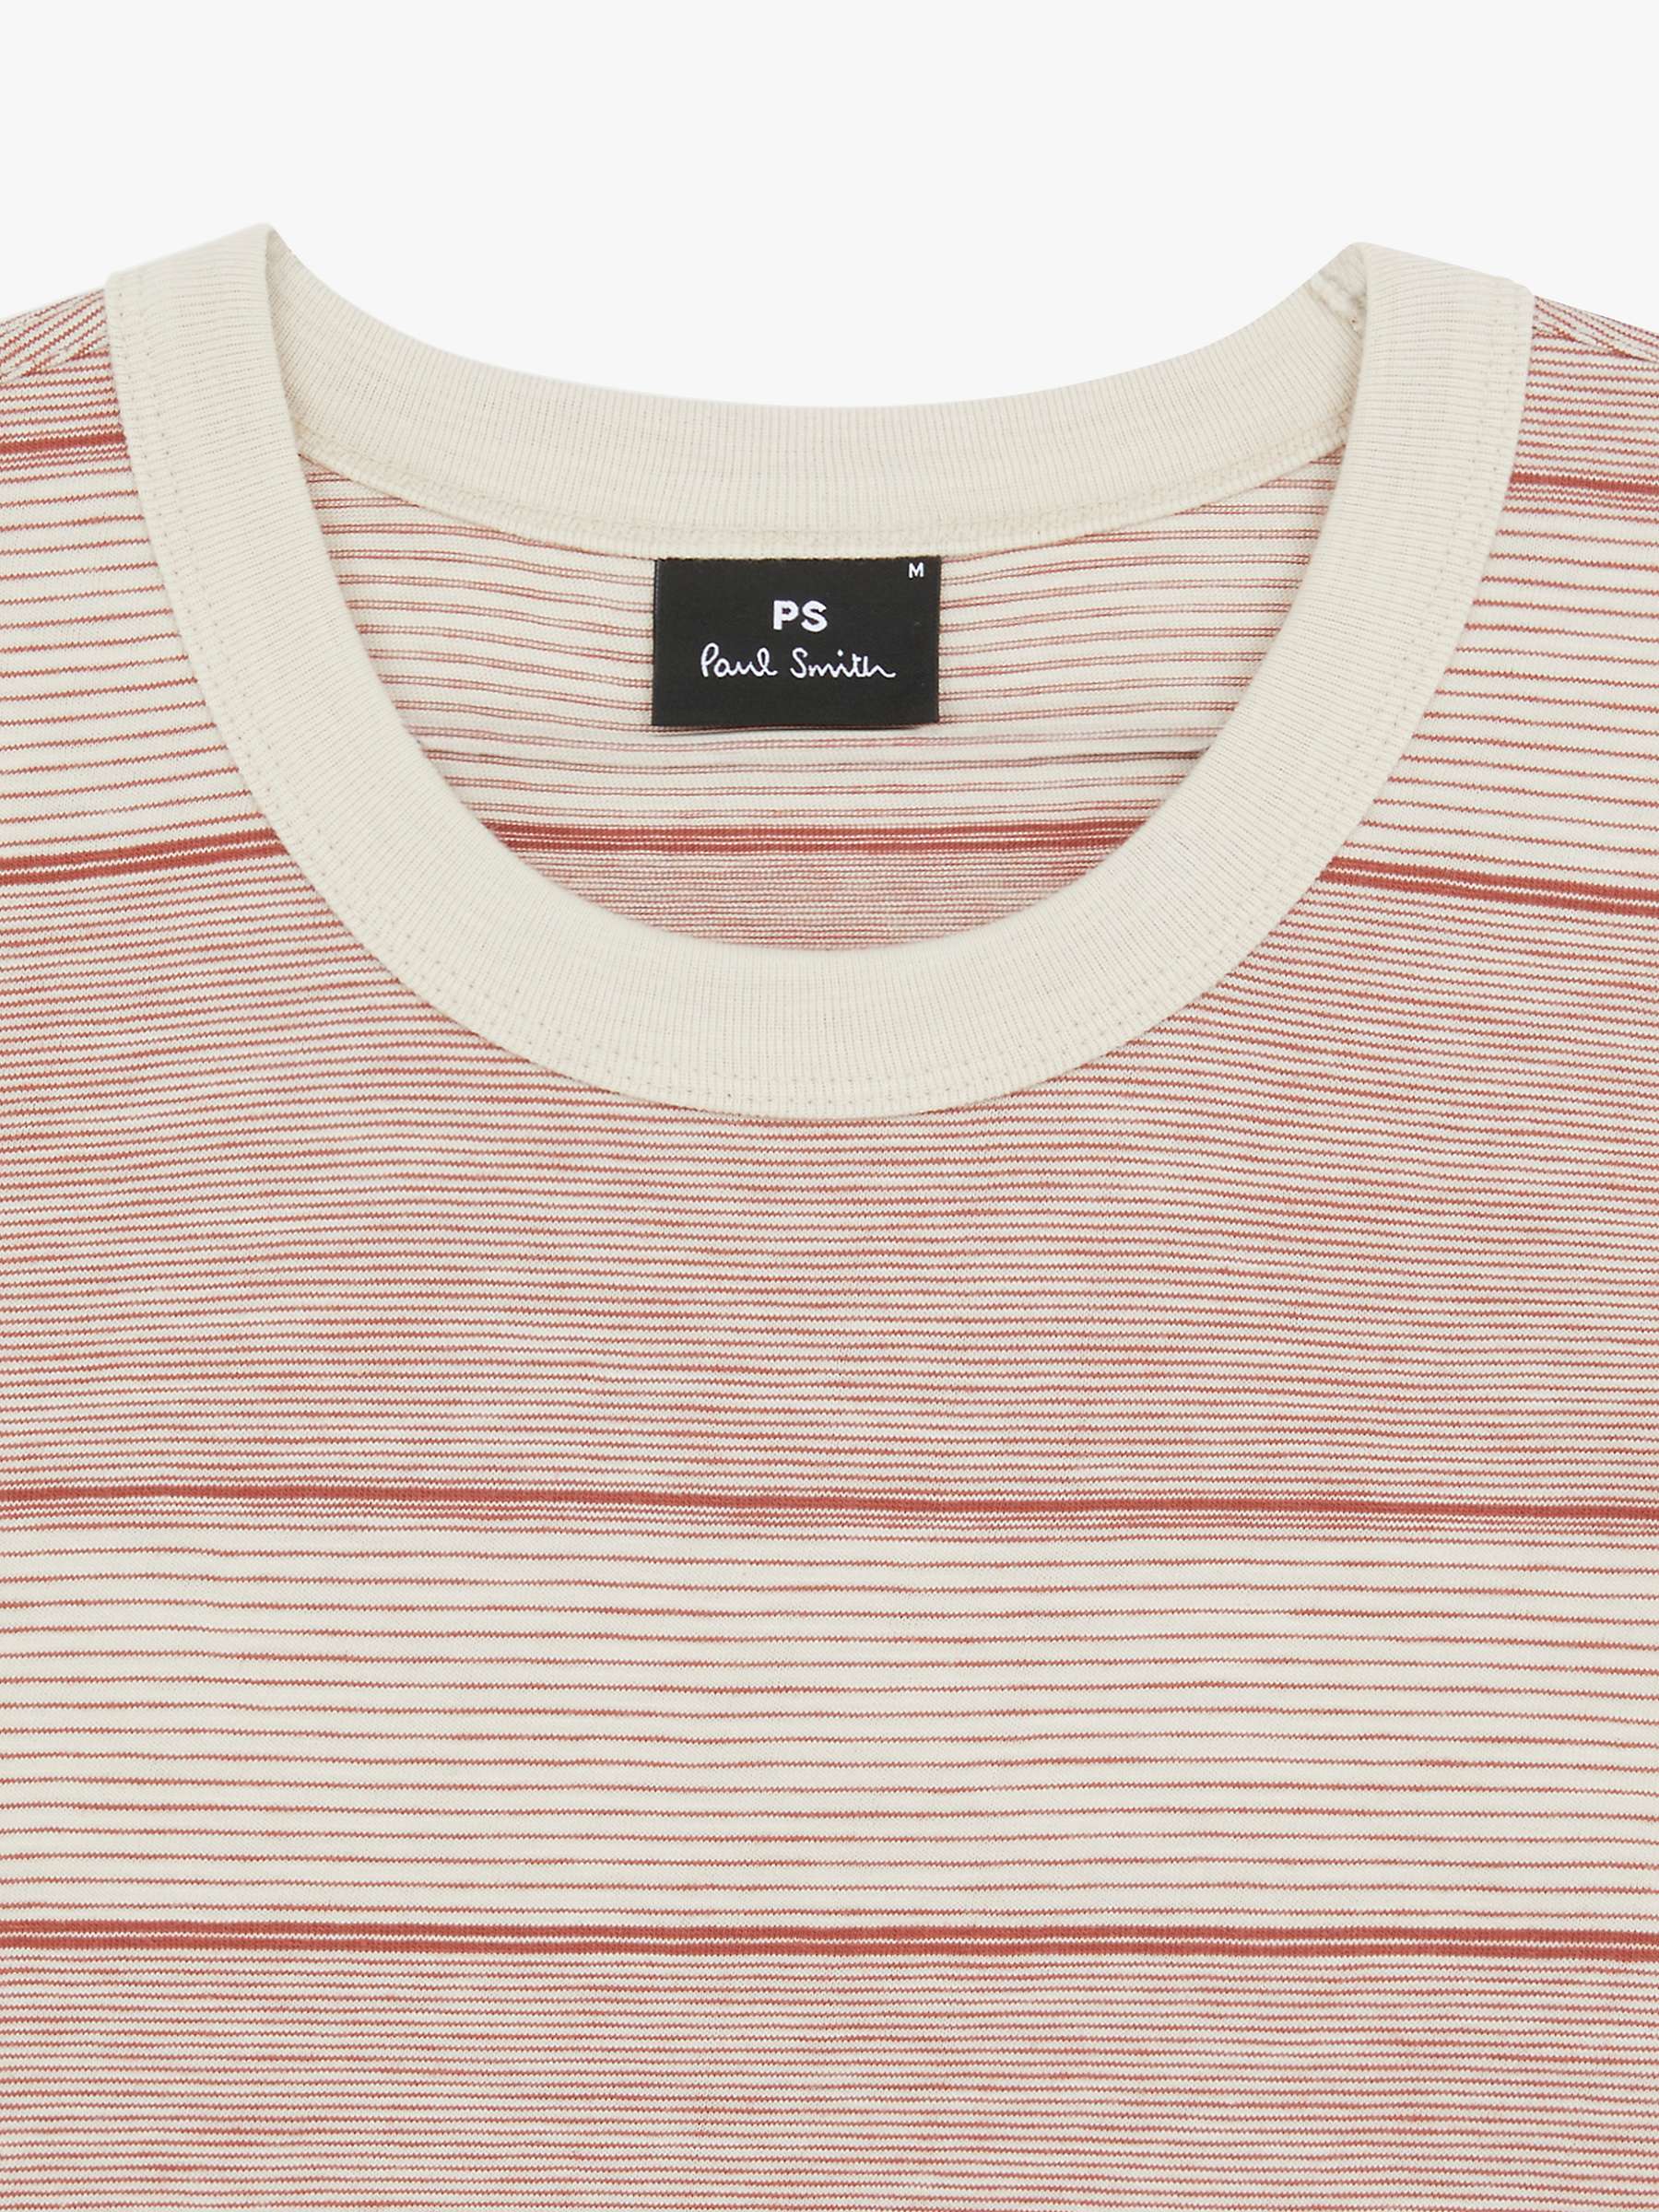 Buy Paul Smith Regular Fit Short Sleeve T-Shirt, Pink Online at johnlewis.com